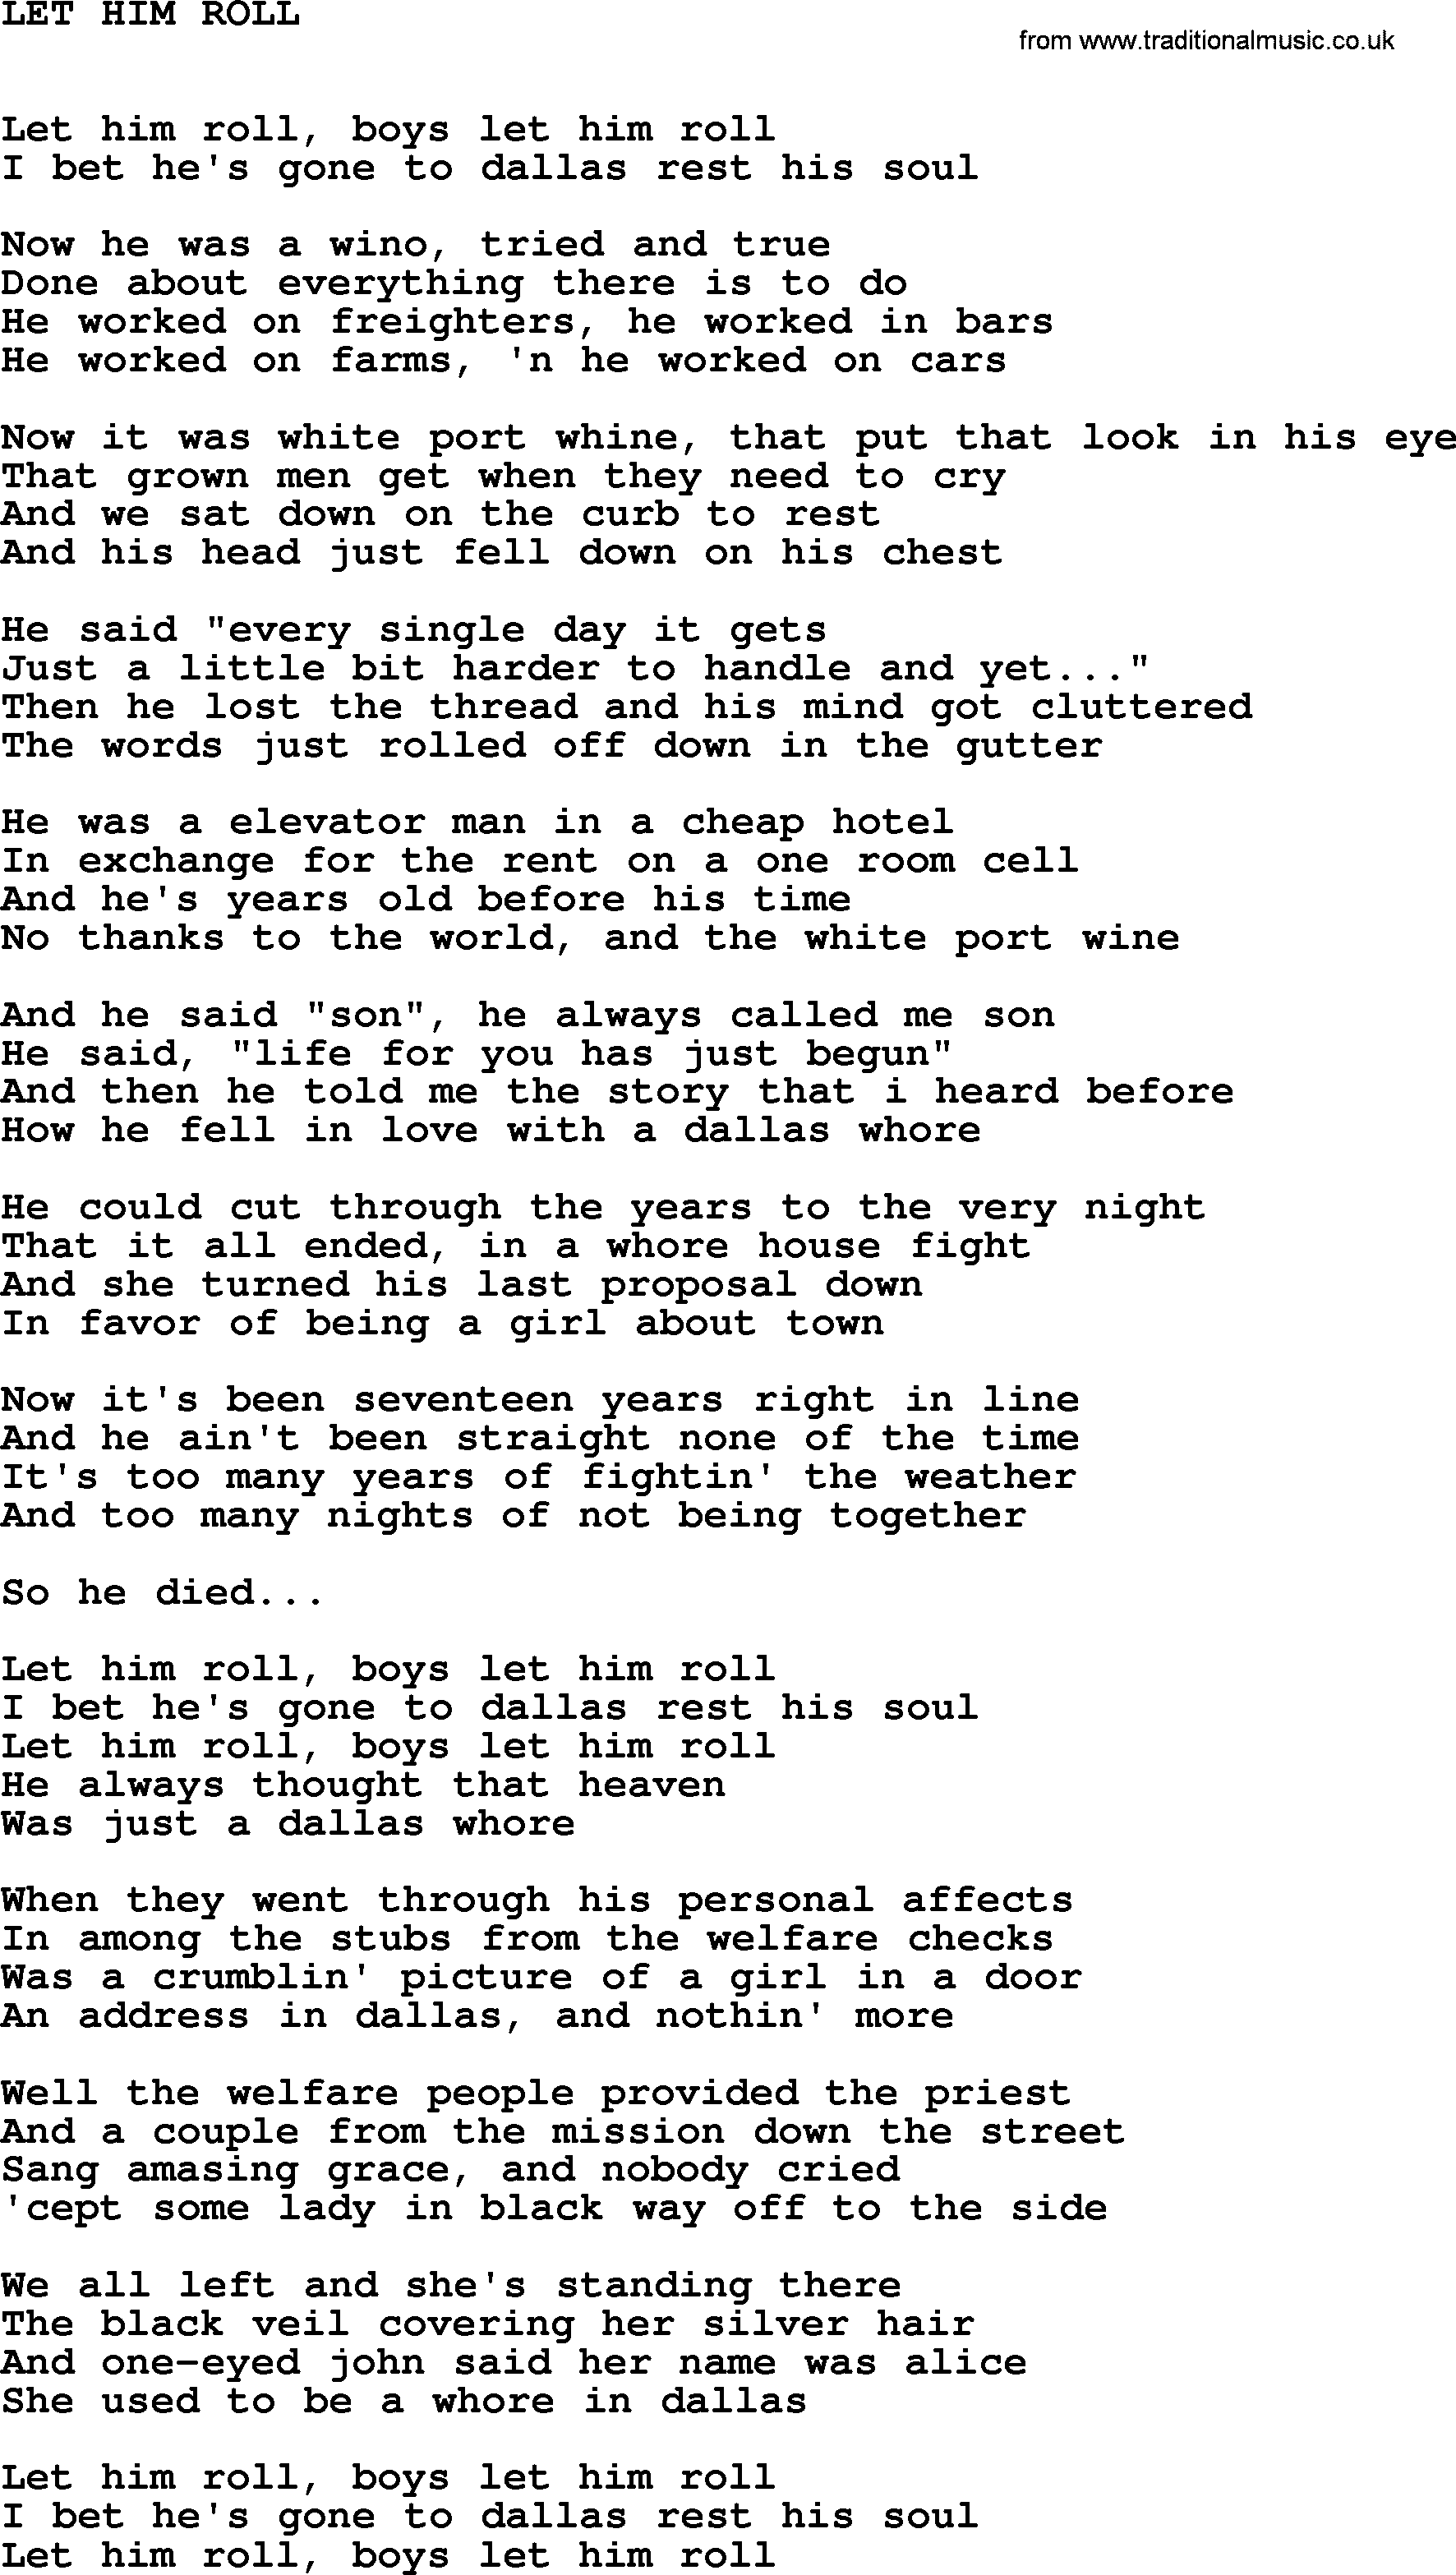 Johnny Cash song Let Him Roll.txt lyrics